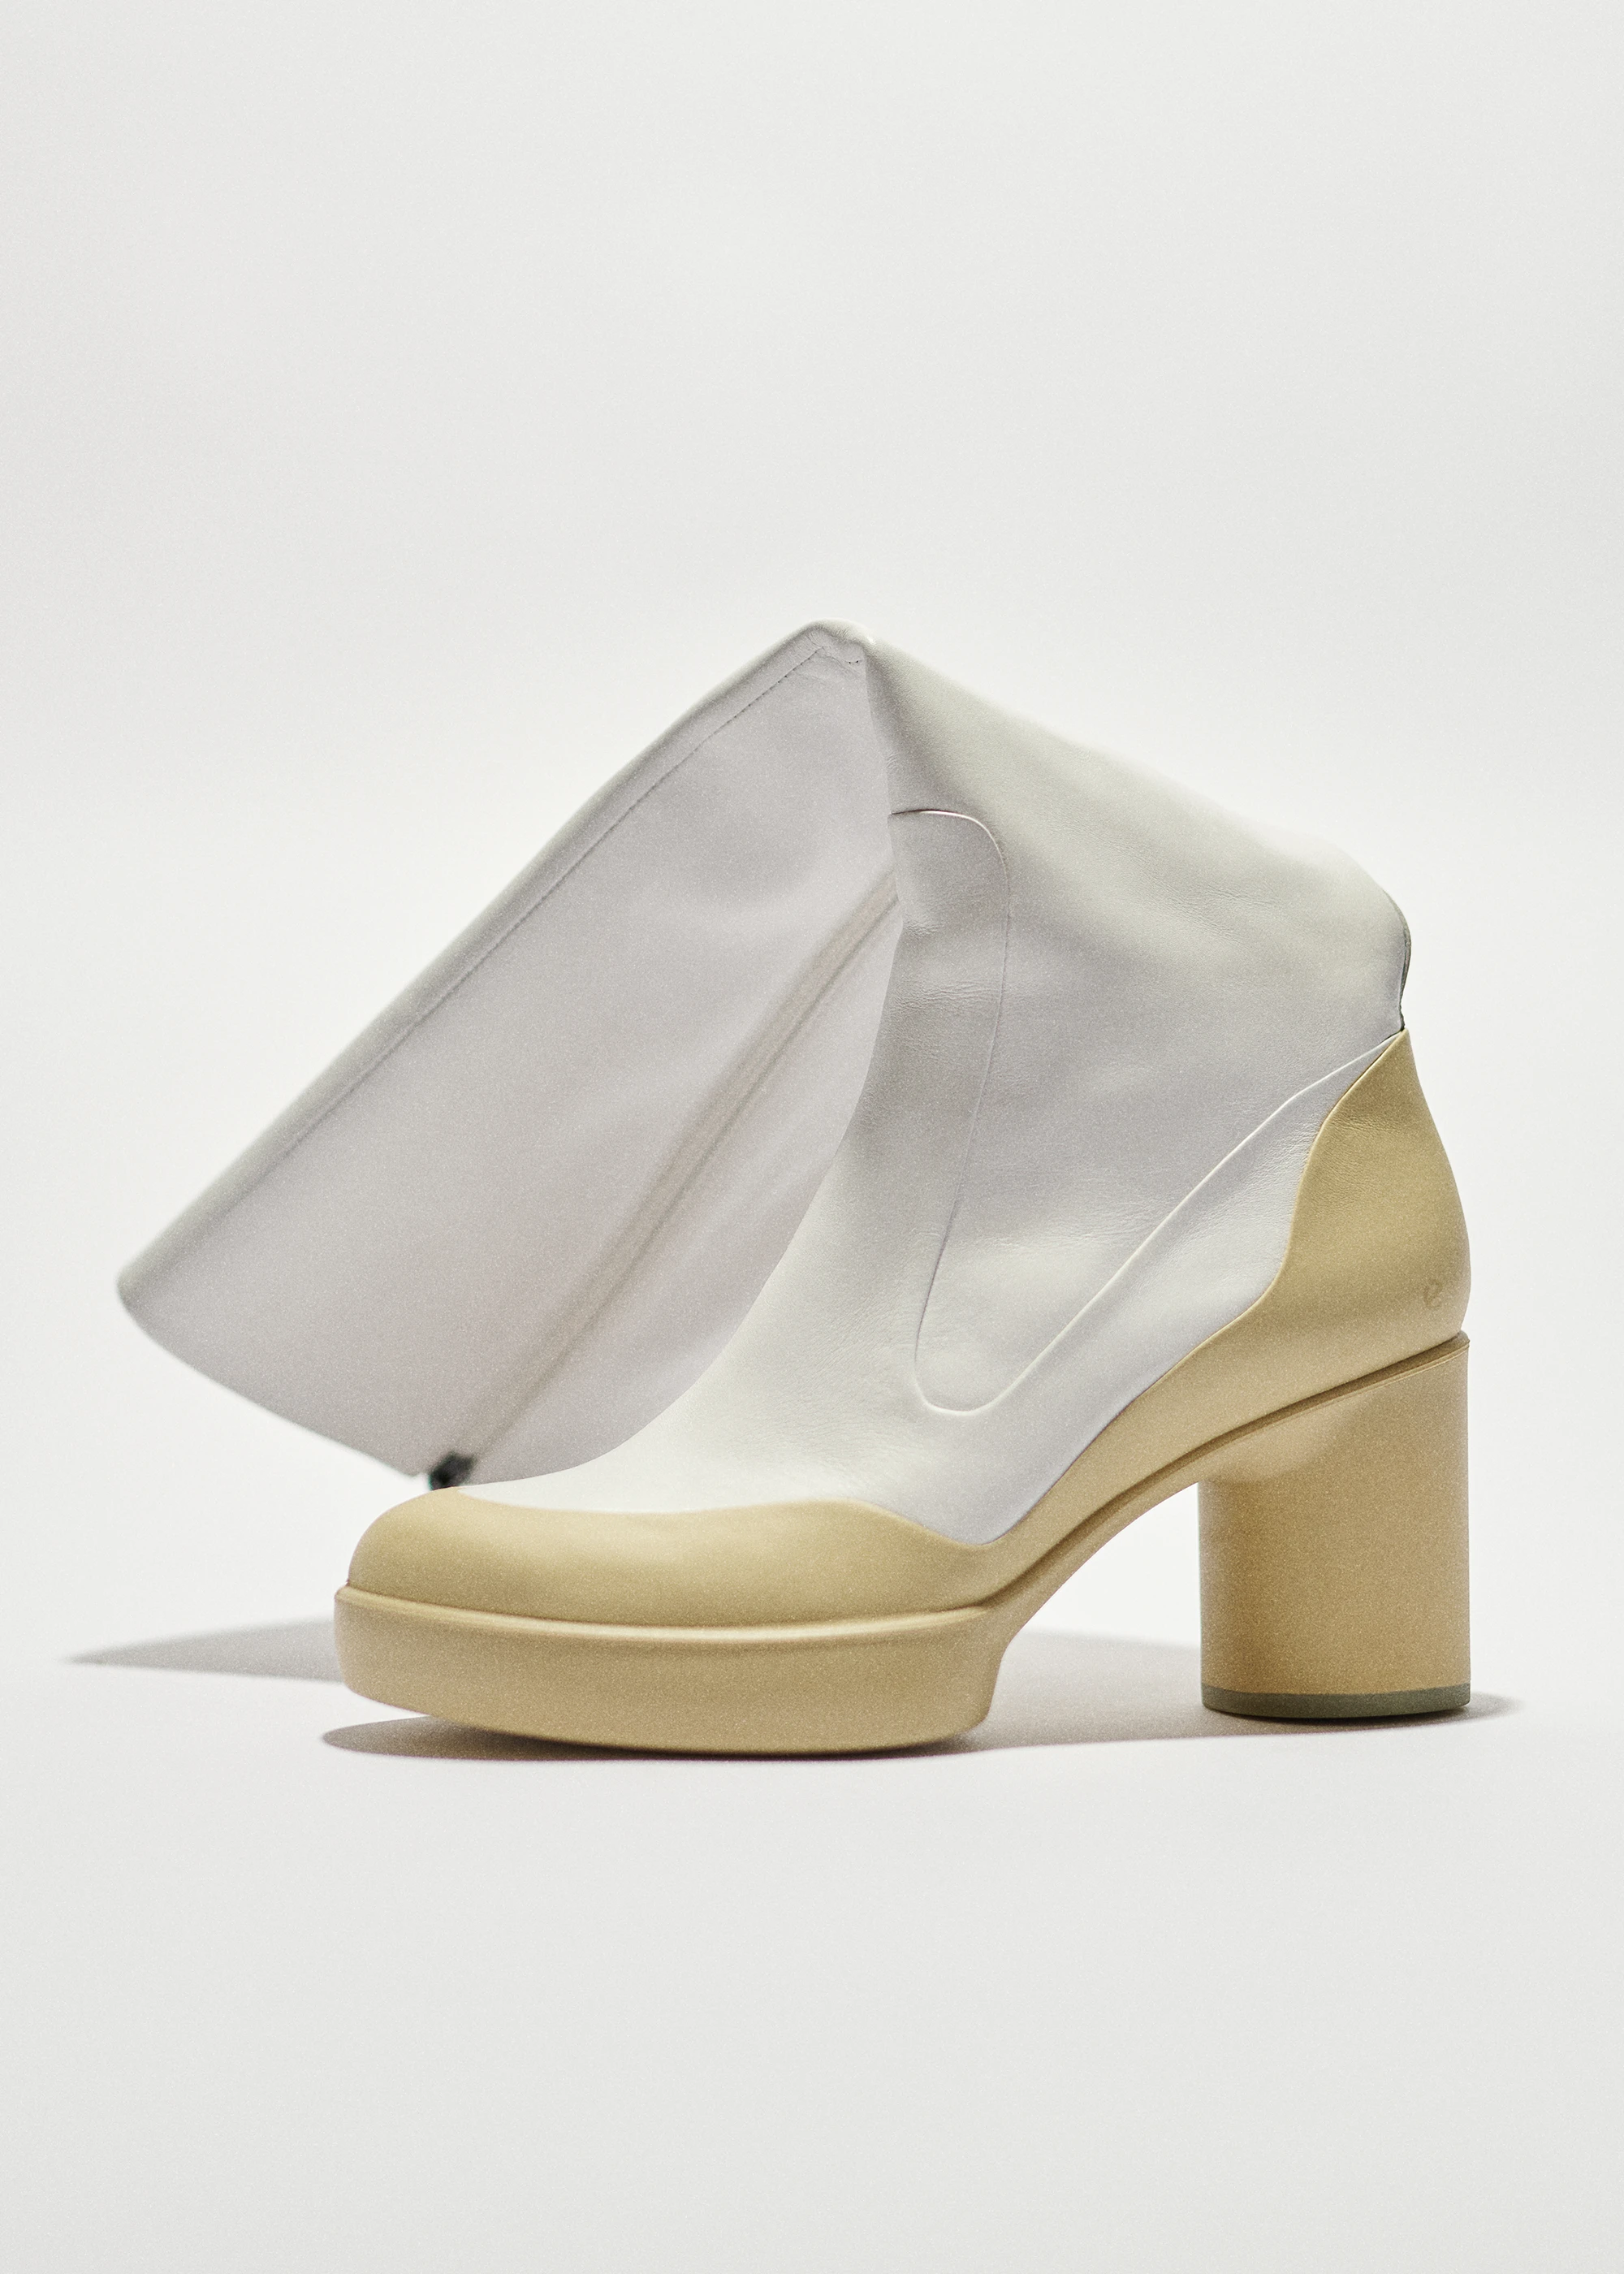 ECCO, Natacha Ramsay-Levi, Footwear, , 2023